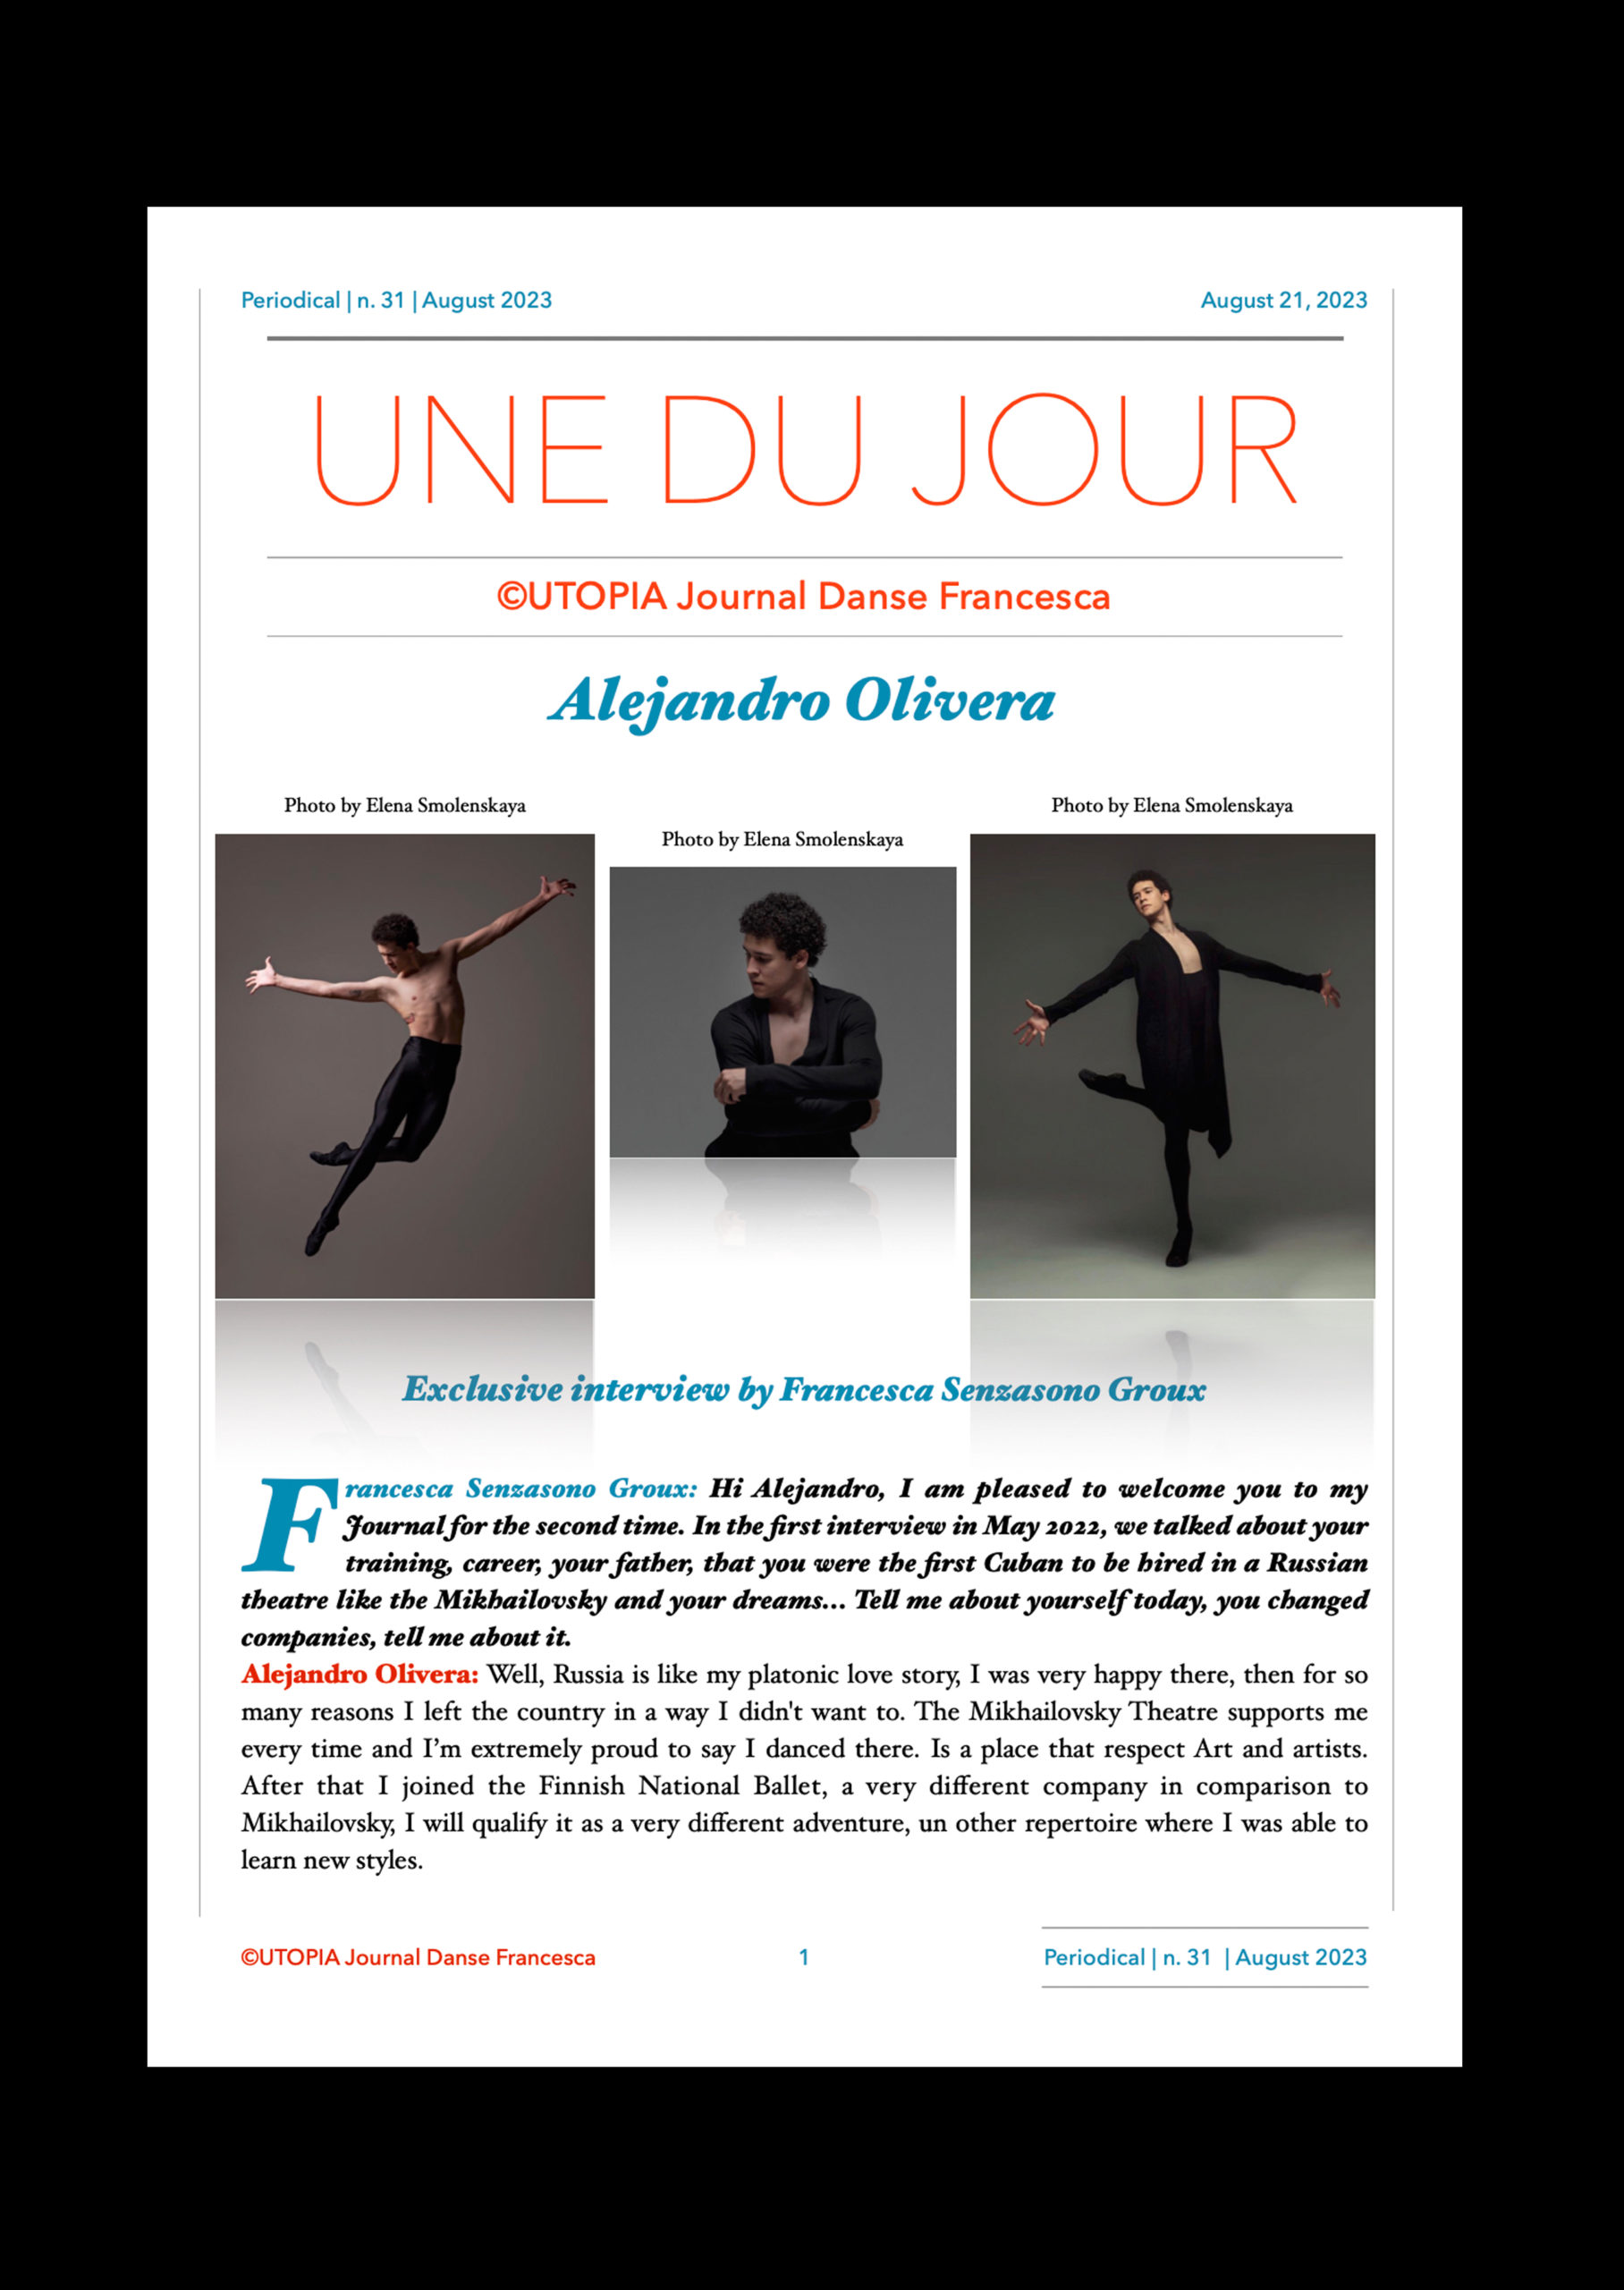 ©Utopia Journal Danse Francesca English version